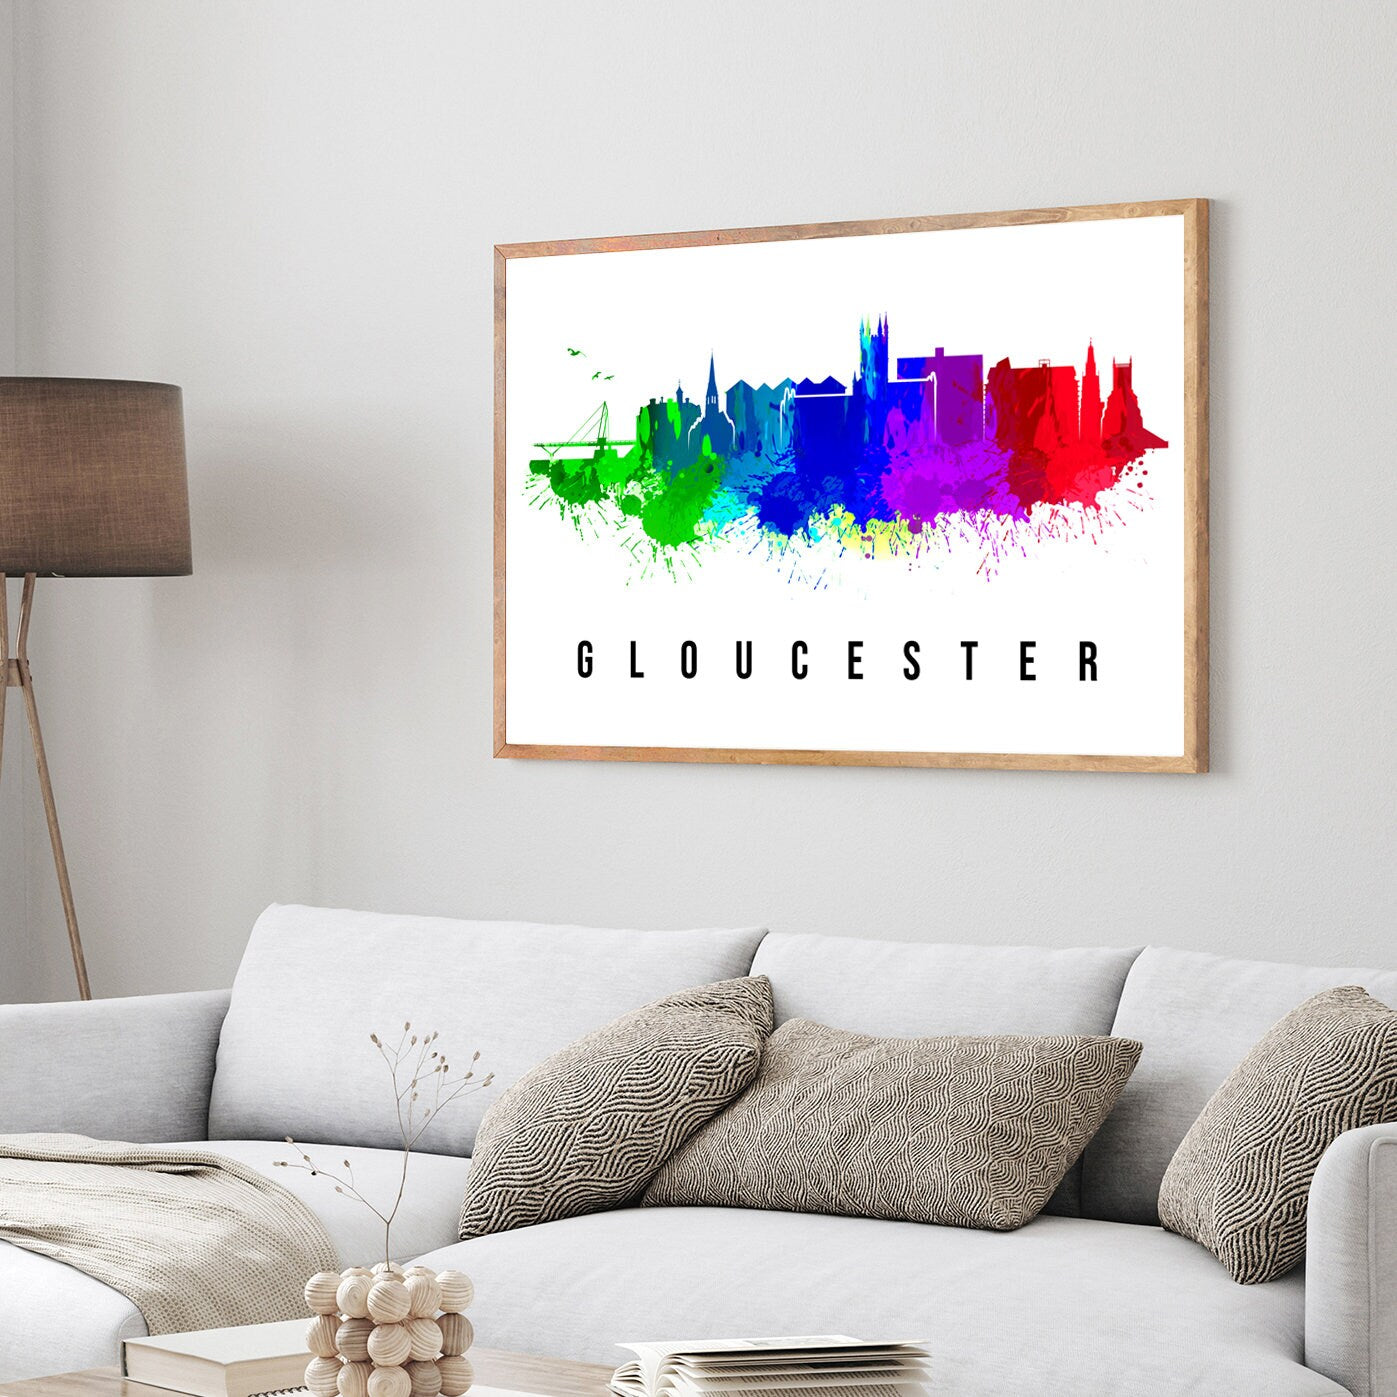 Gloucester England Poster, Skyline poster cityscape poster, Landmark City Illustration poster, Home wall decoration, Office wall art